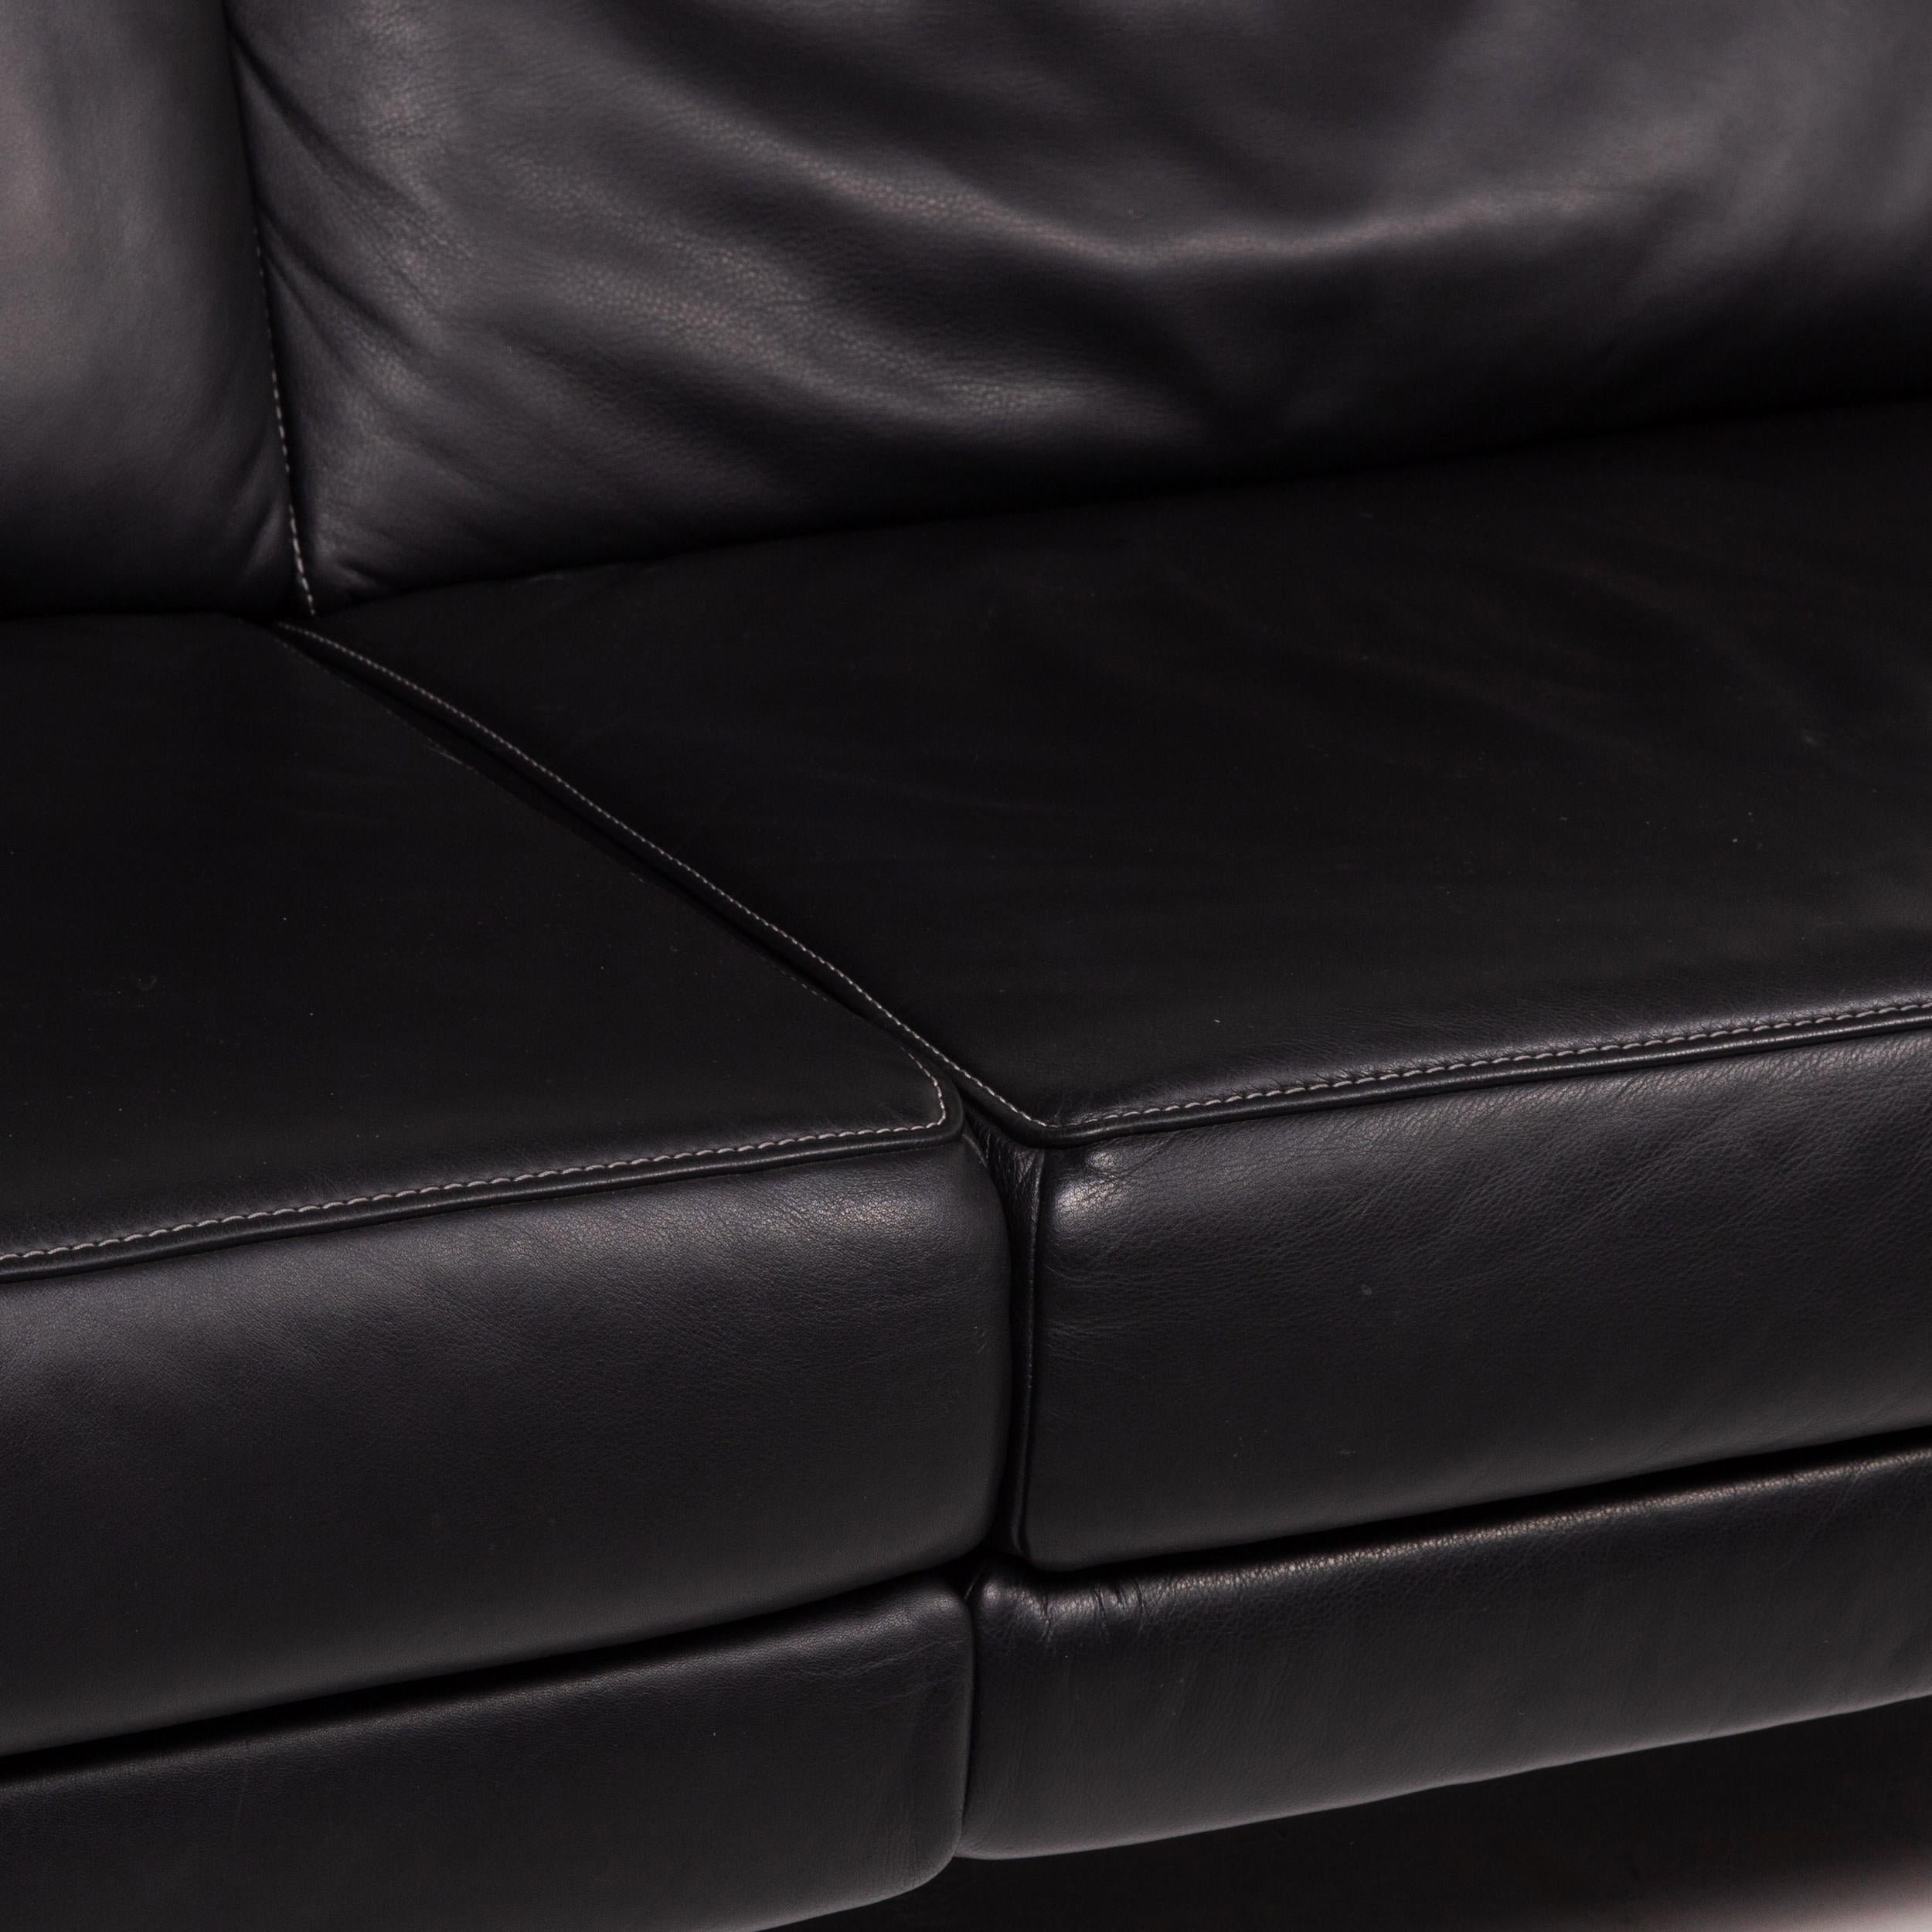 European Mondo Leather Sofa Black Three-Seat Electrical Function Relaxation Function